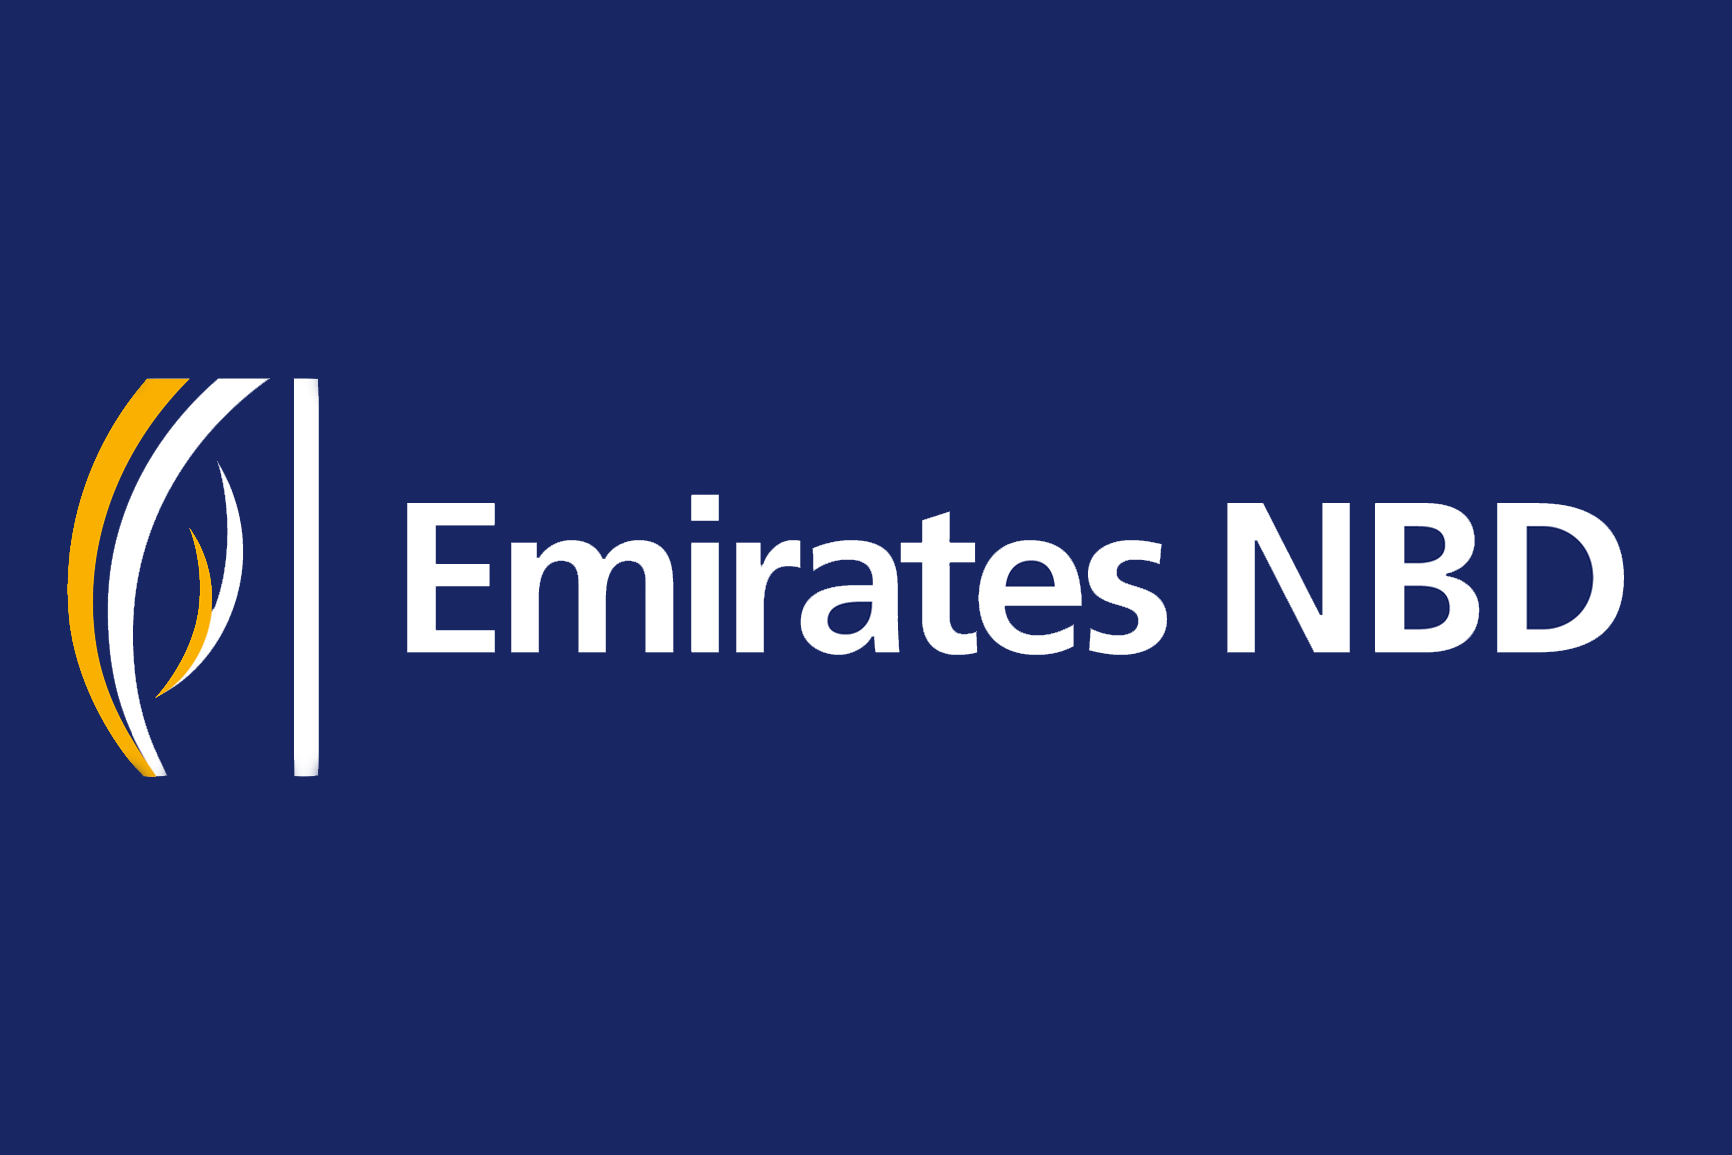 Emirates nbd bank. Emirates NBD. Банк Emirates NBD. Emirates NBD логотип. Эмблема НБД банк.